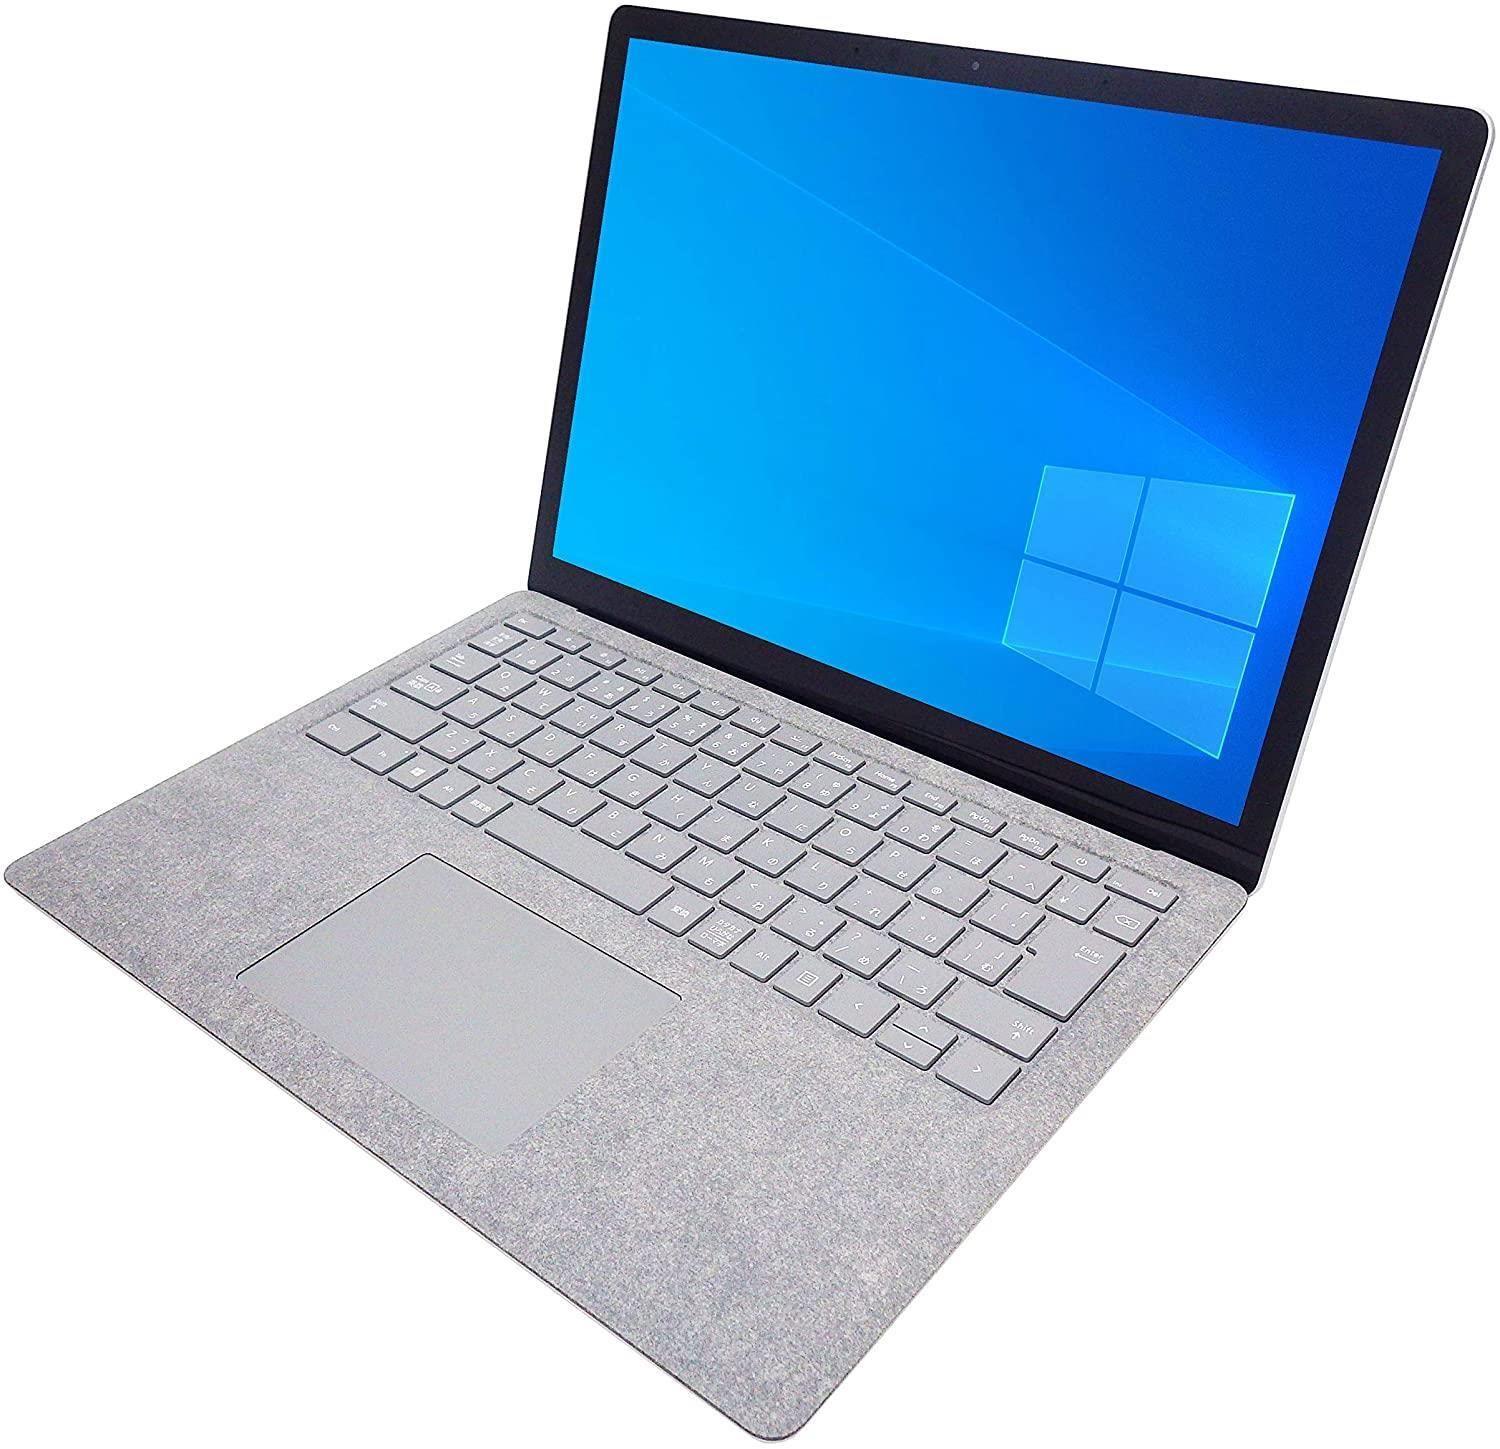 Microsoft Surface Laptop 1 13.5" i7-7660U 256GB 8GB Touchscreen Windows Laptop C